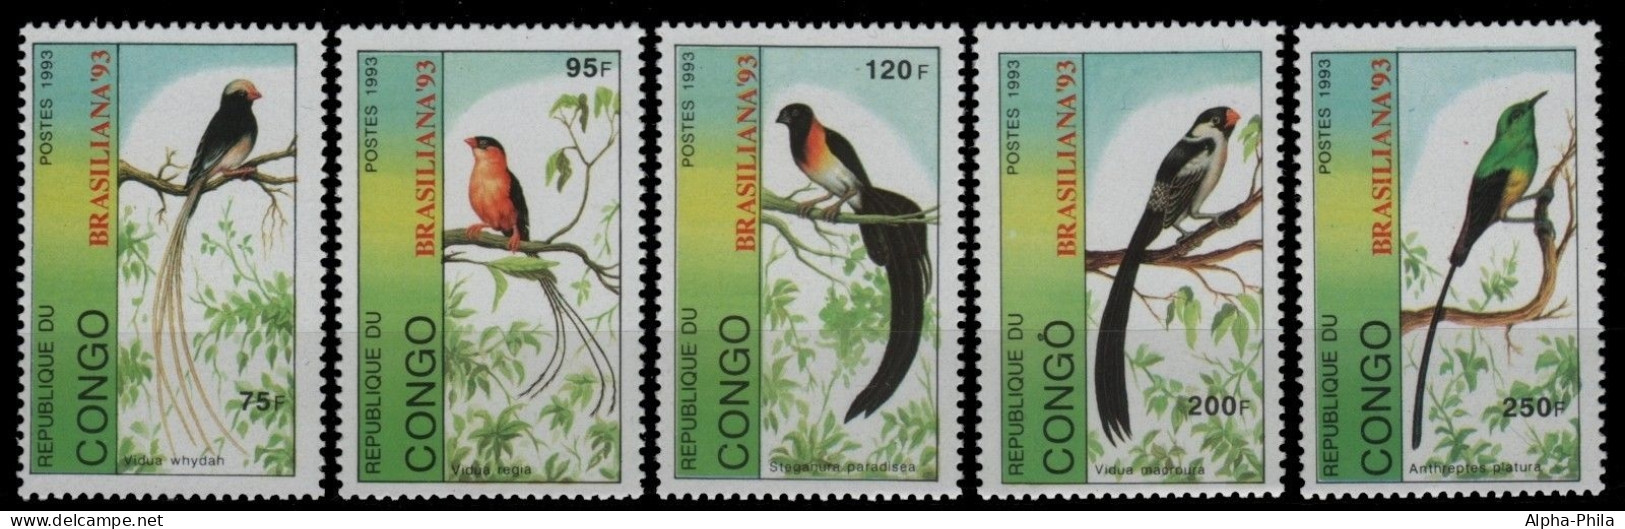 Kongo-Brazzaville 1993 - Mi-Nr. 1392-1396 ** - MNH - Vögel / Birds - Mint/hinged